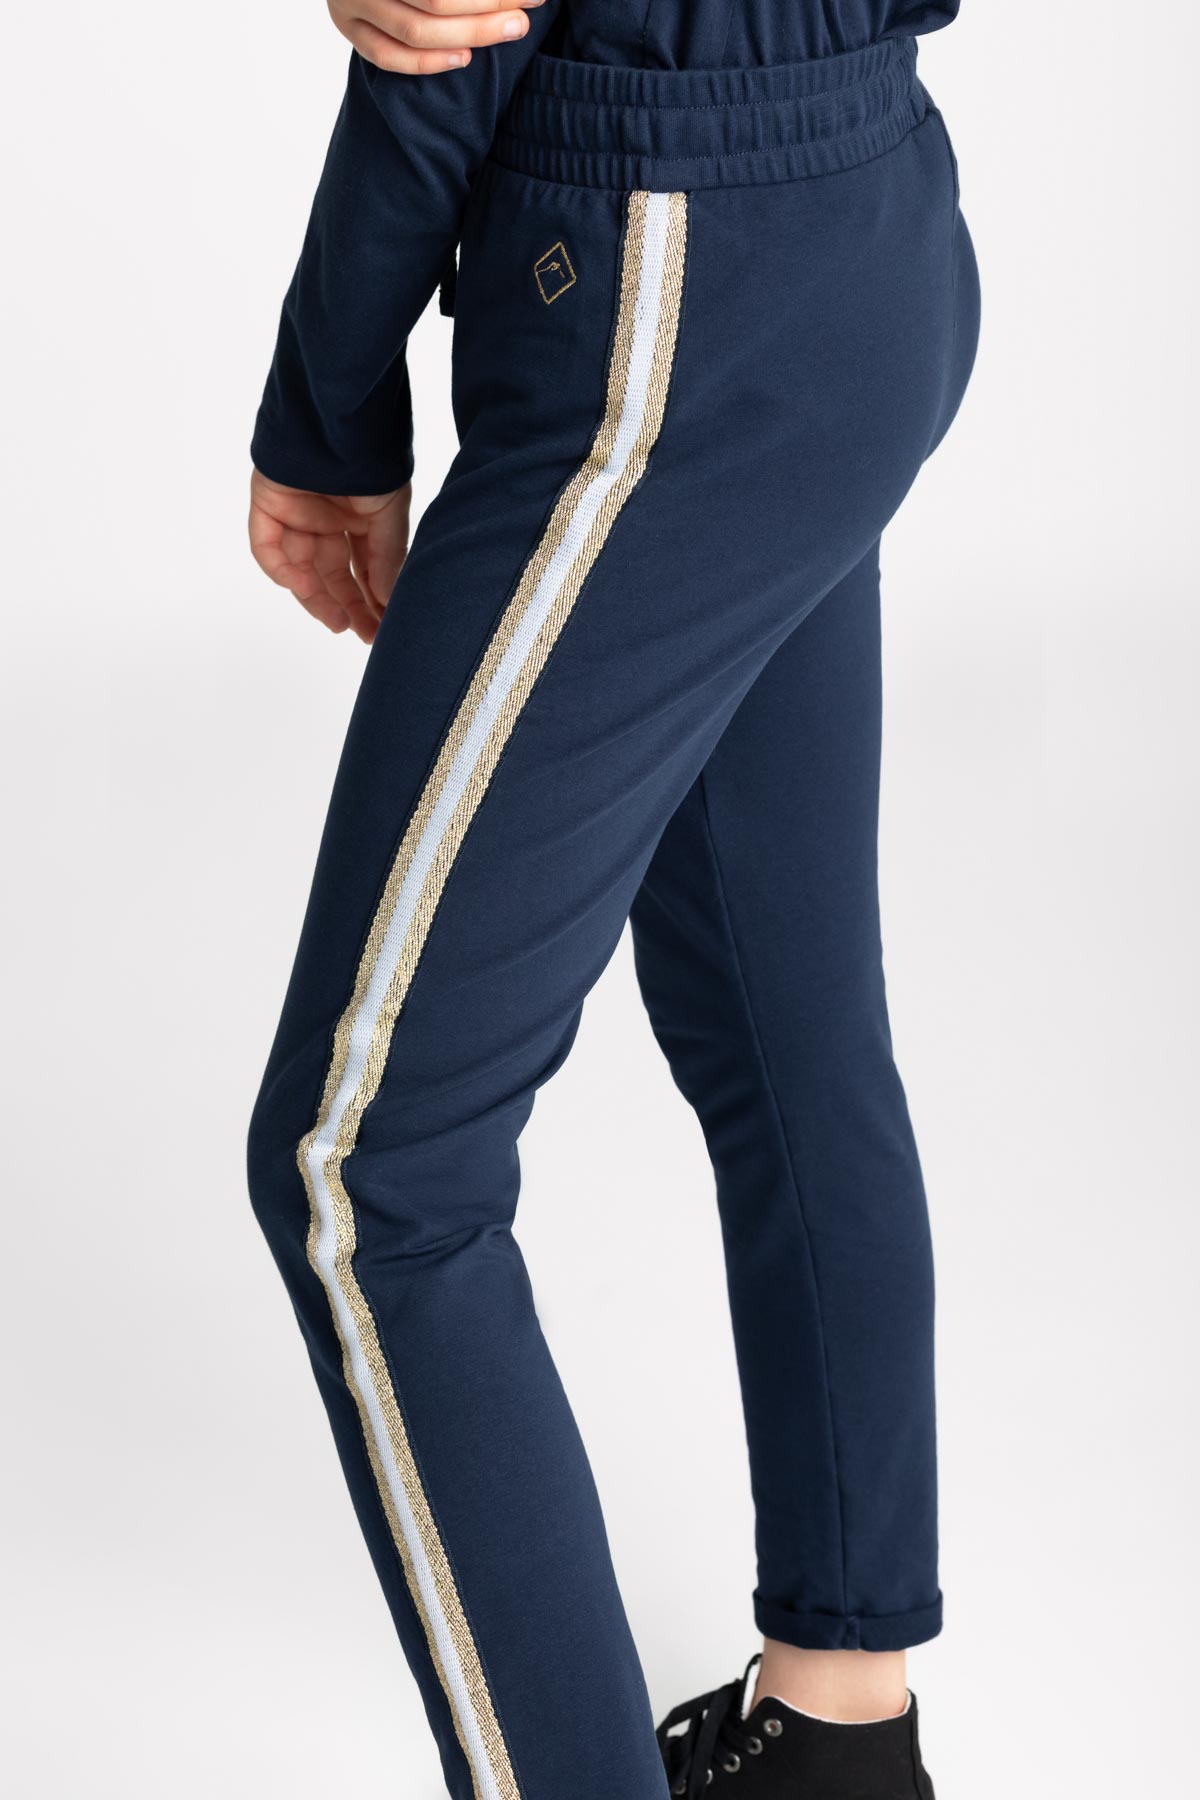 Volcano Kids's Regular Silhouette Jogging Trousers N-Joy Junior G28385-W22 Navy Blue